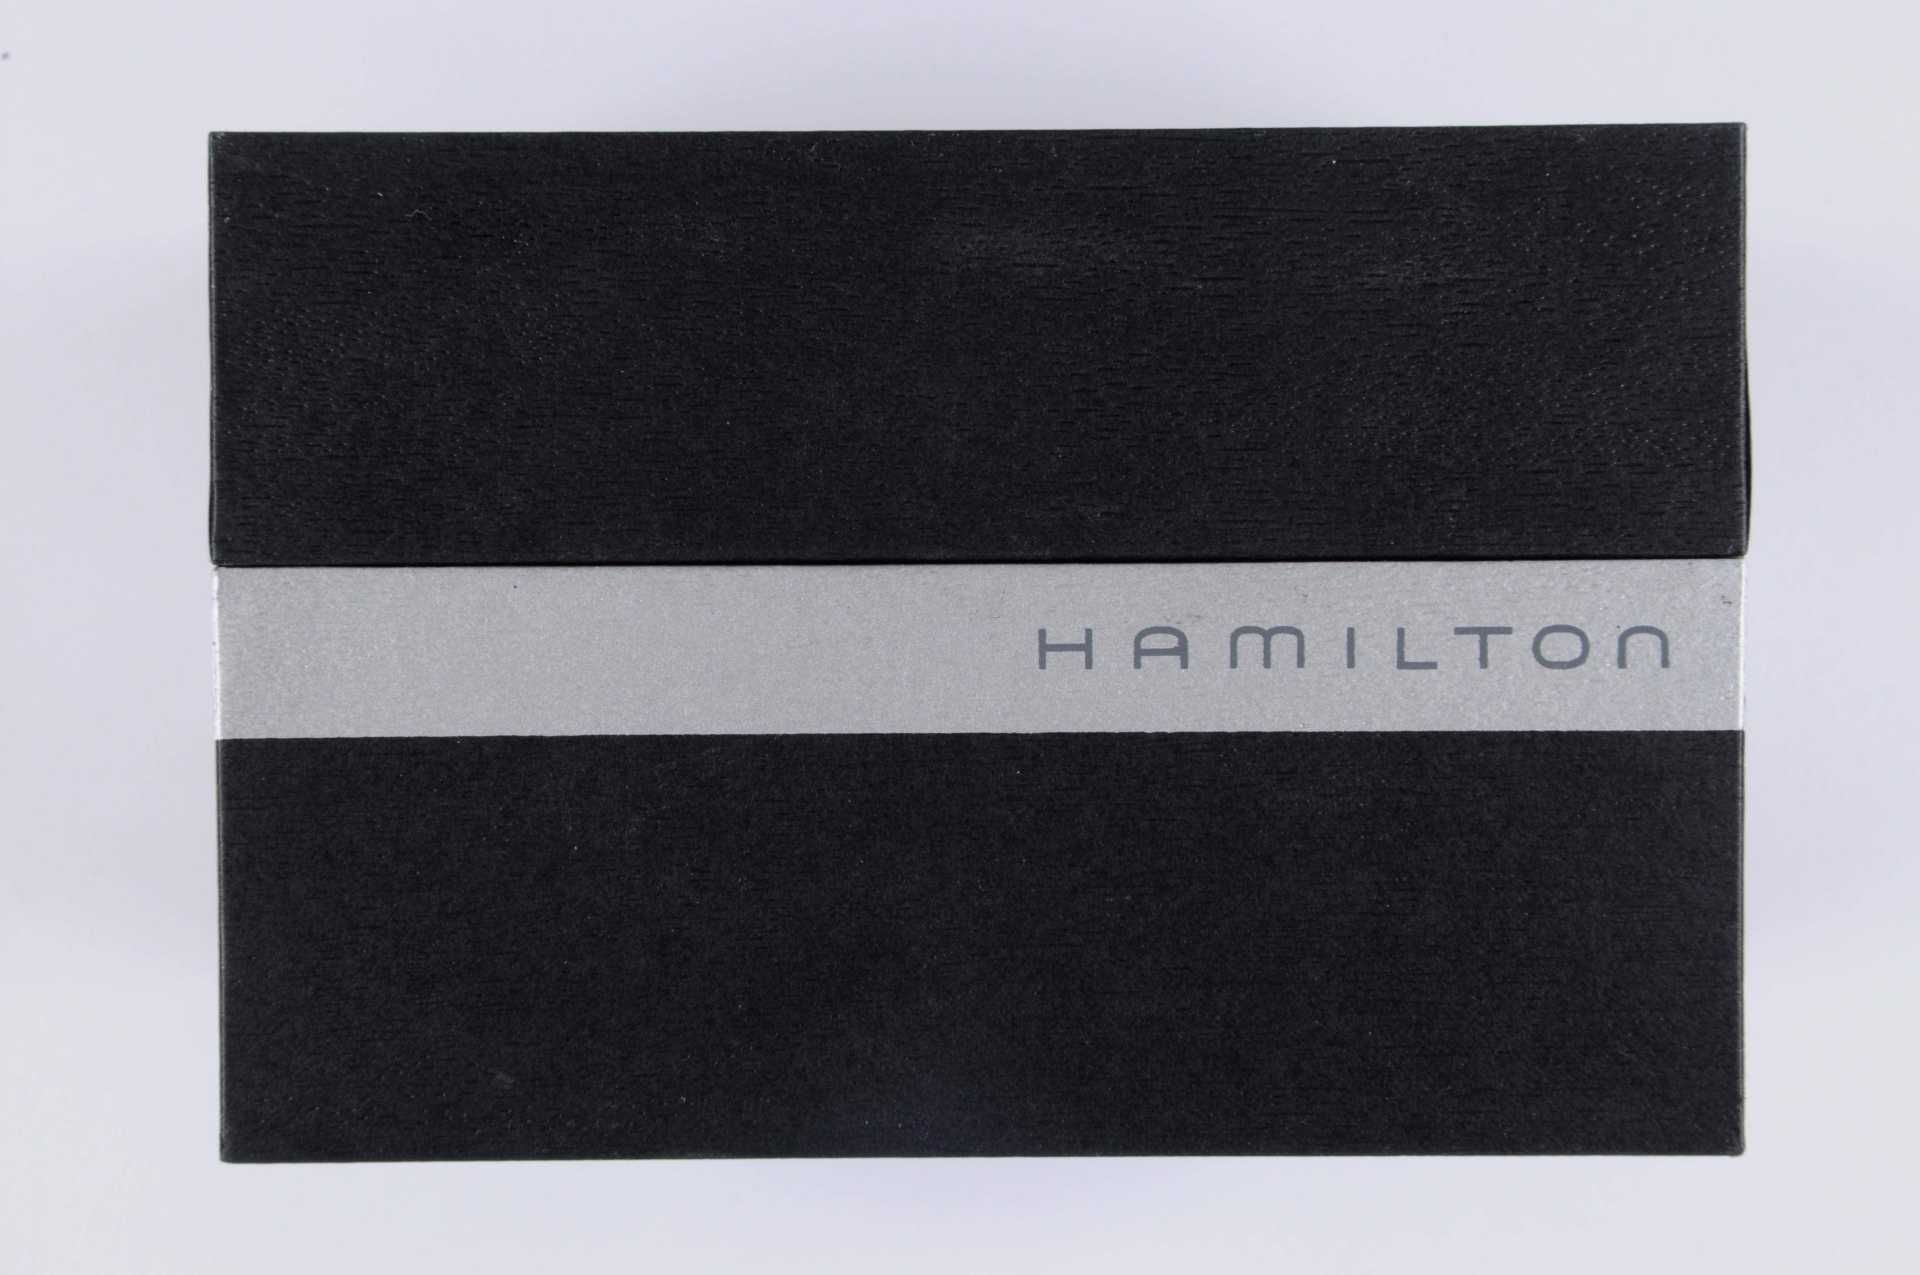 Hamilton Jazzmaster Open Secret Herren Chronograph. Ca. 44m, Edelstahl, Automatik, Kaliber Valjoux 7 - Bild 3 aus 6